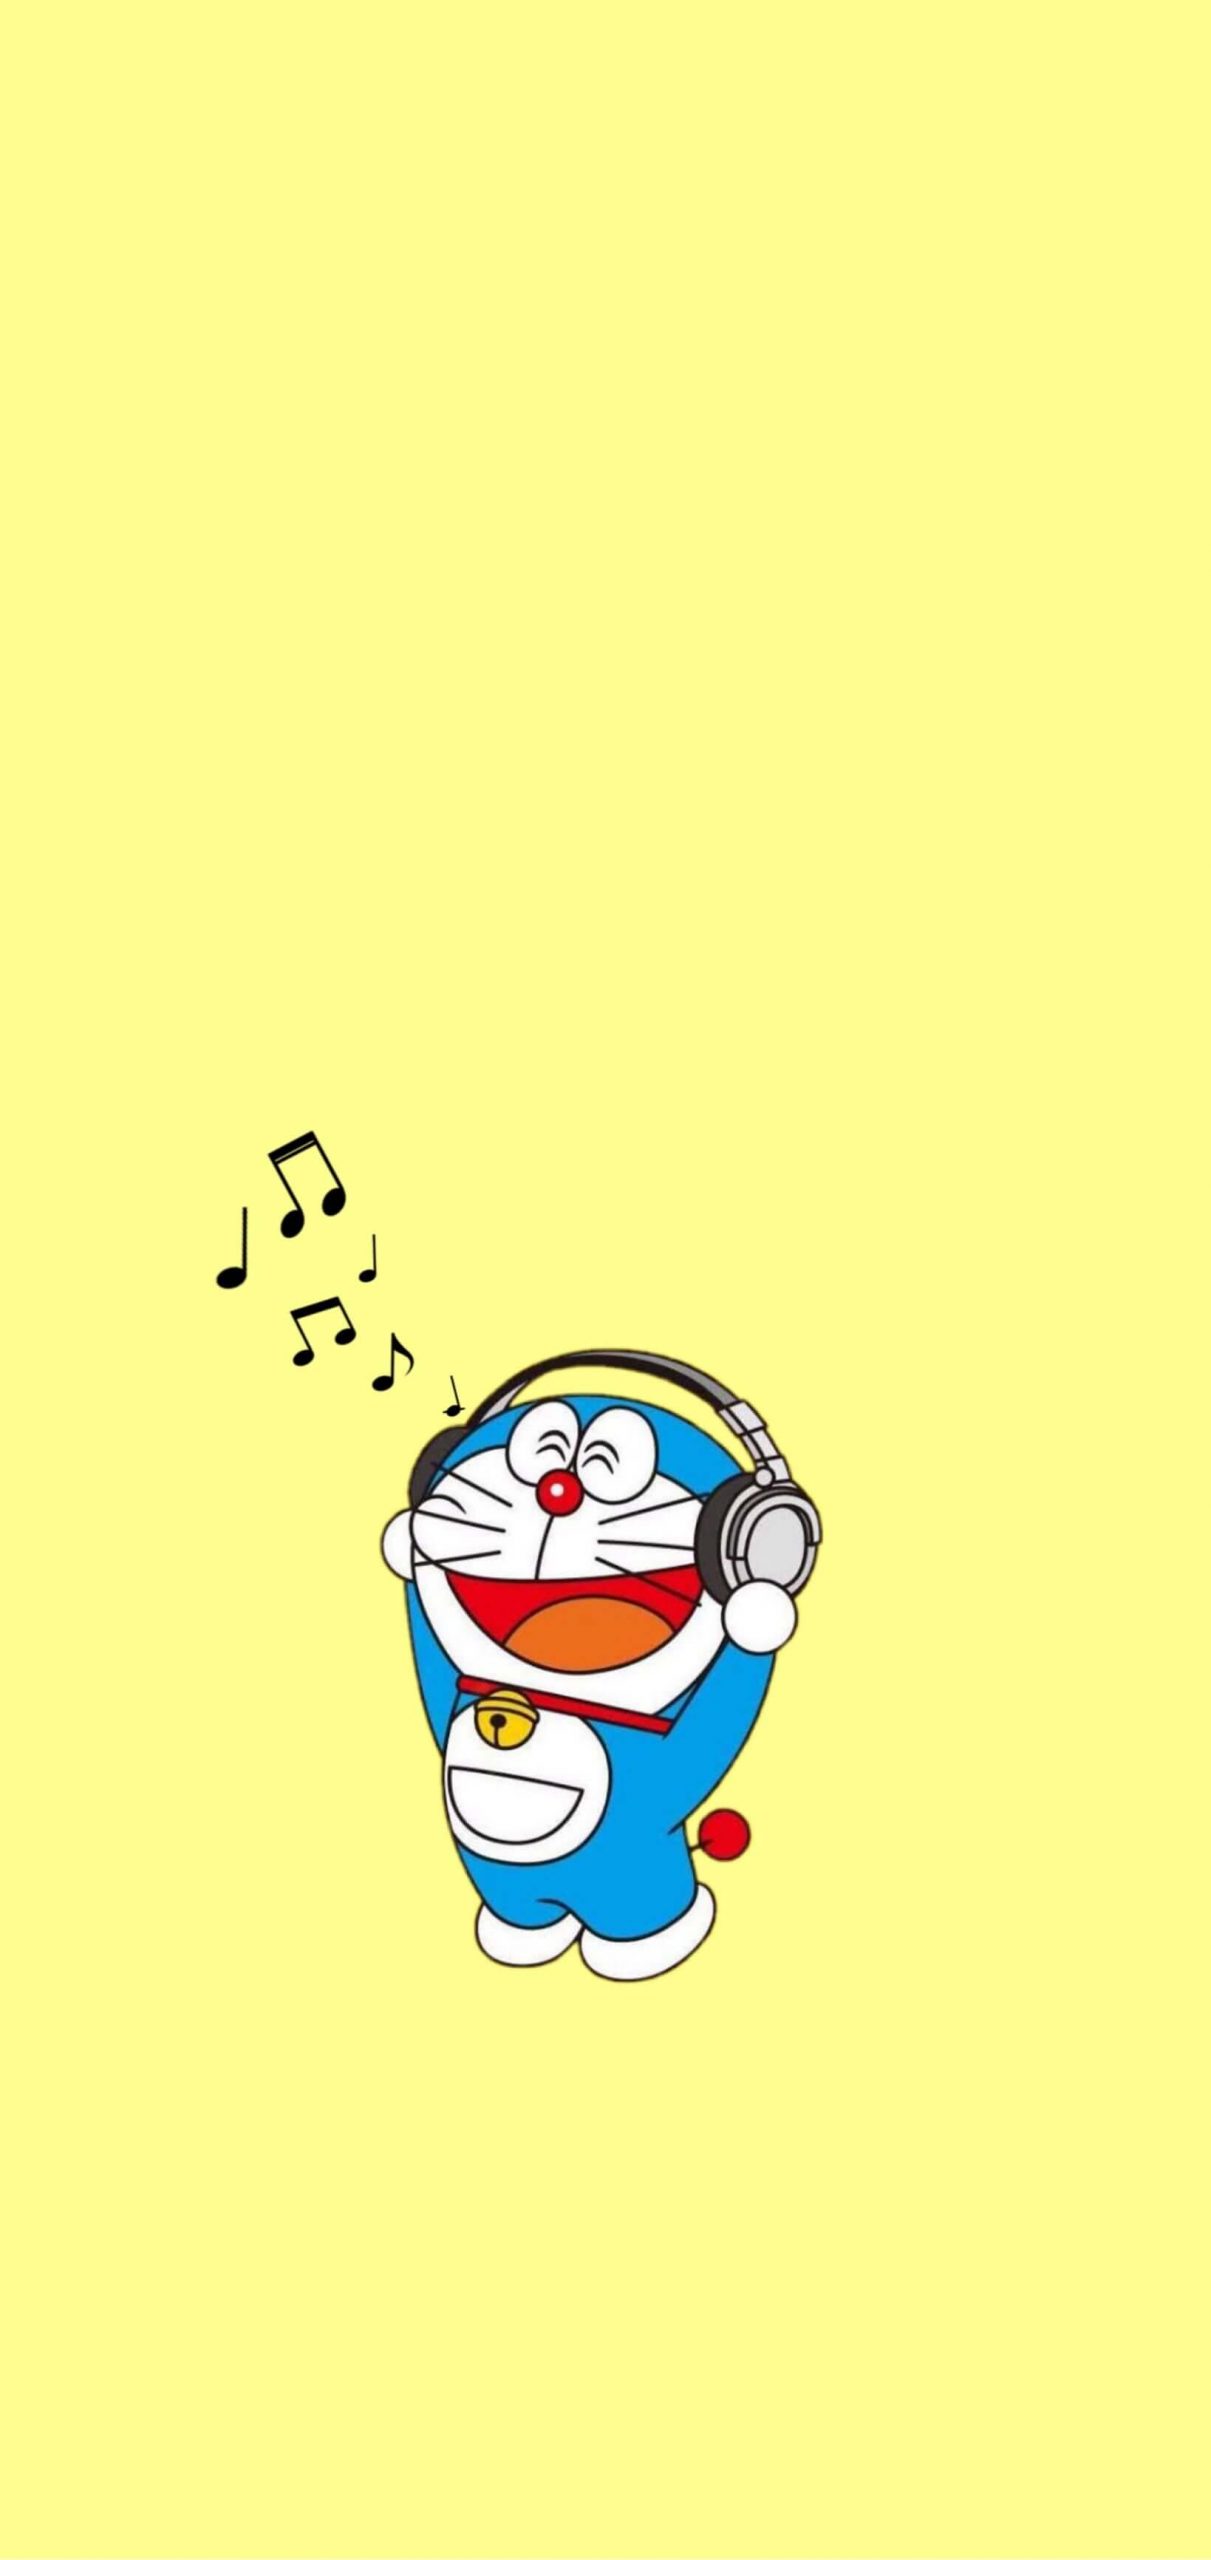 Em TV  Hình nền Doraemon cho mọi người đây   Facebook